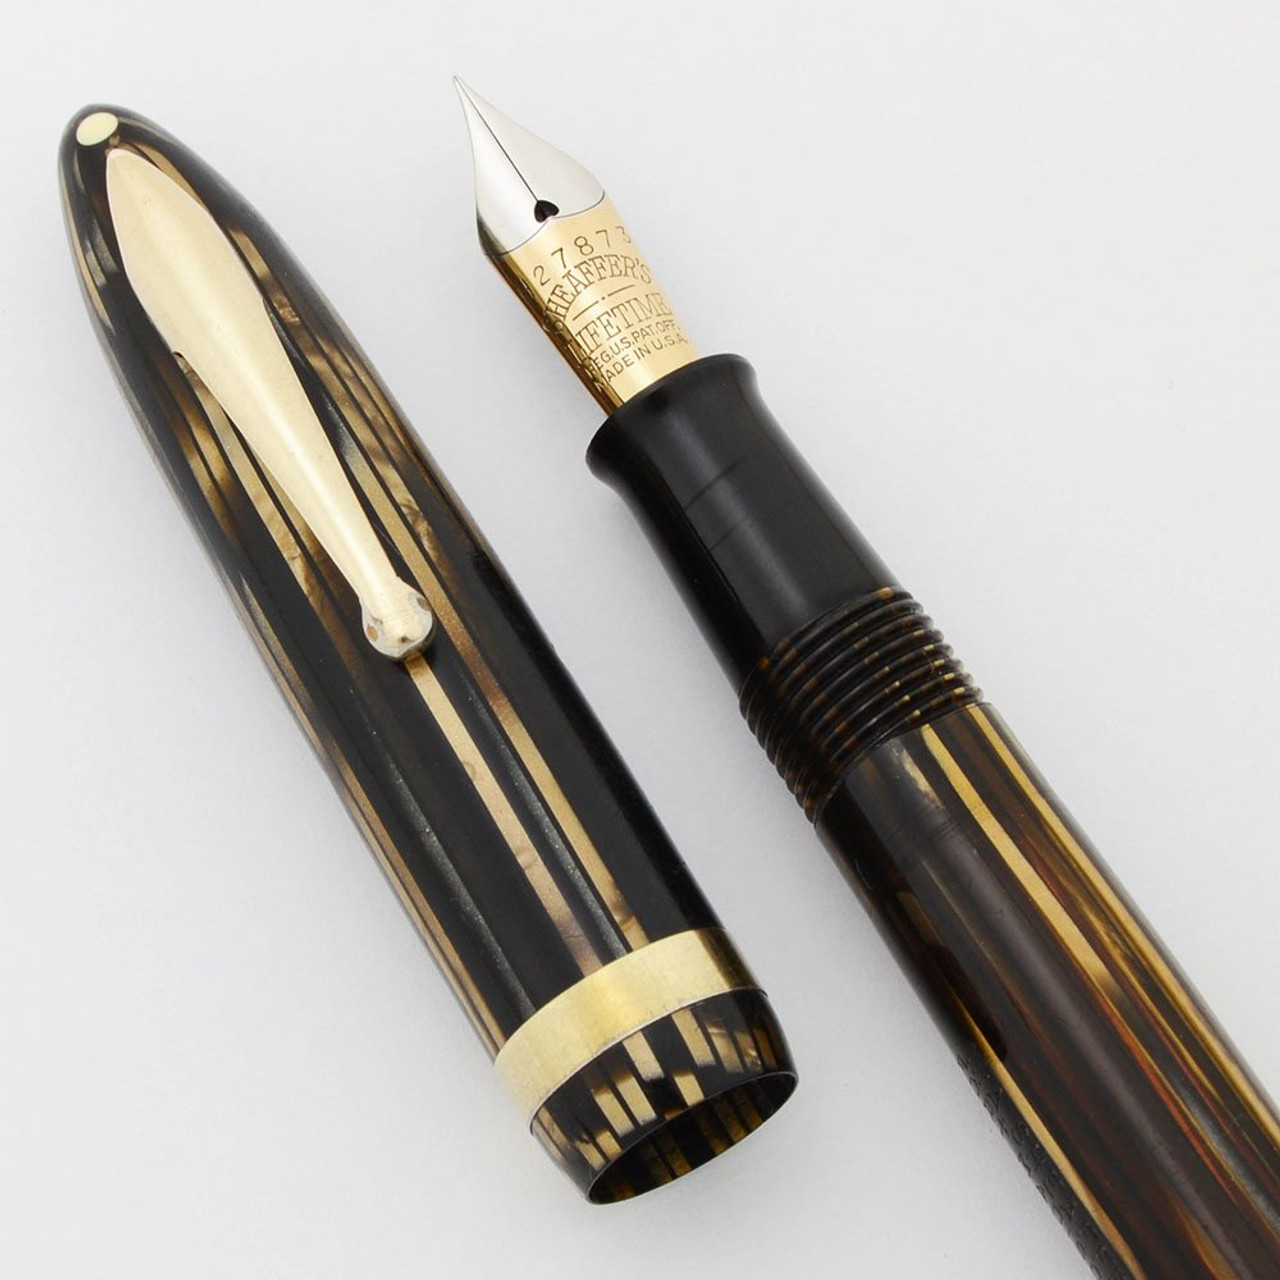 Sheaffer Balance Lifetime 875 Fountain Pen (1940s) - Brown Striated, Vac-Fill, Extra Fine 14k Nib (Very Nice, Restored)